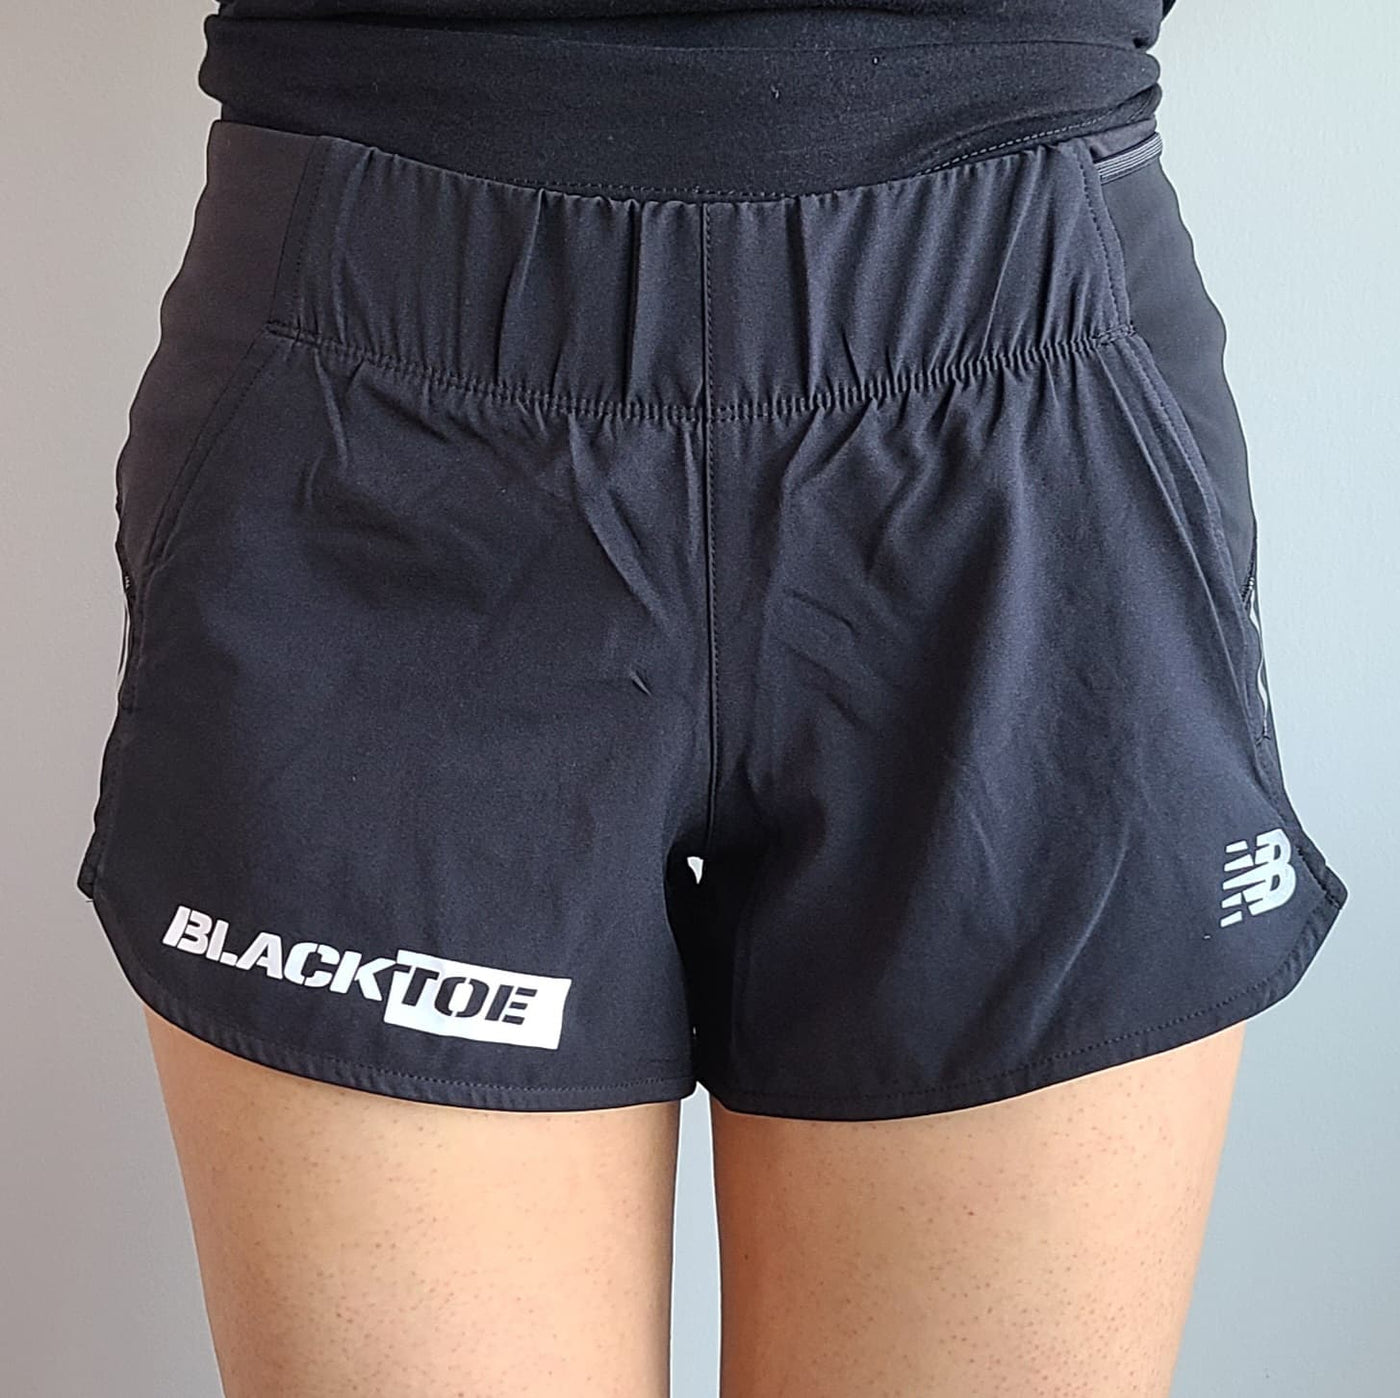 BlackToe Women's NB 3" Impact Short - New! Women's Shorts - BlackToe Running - 